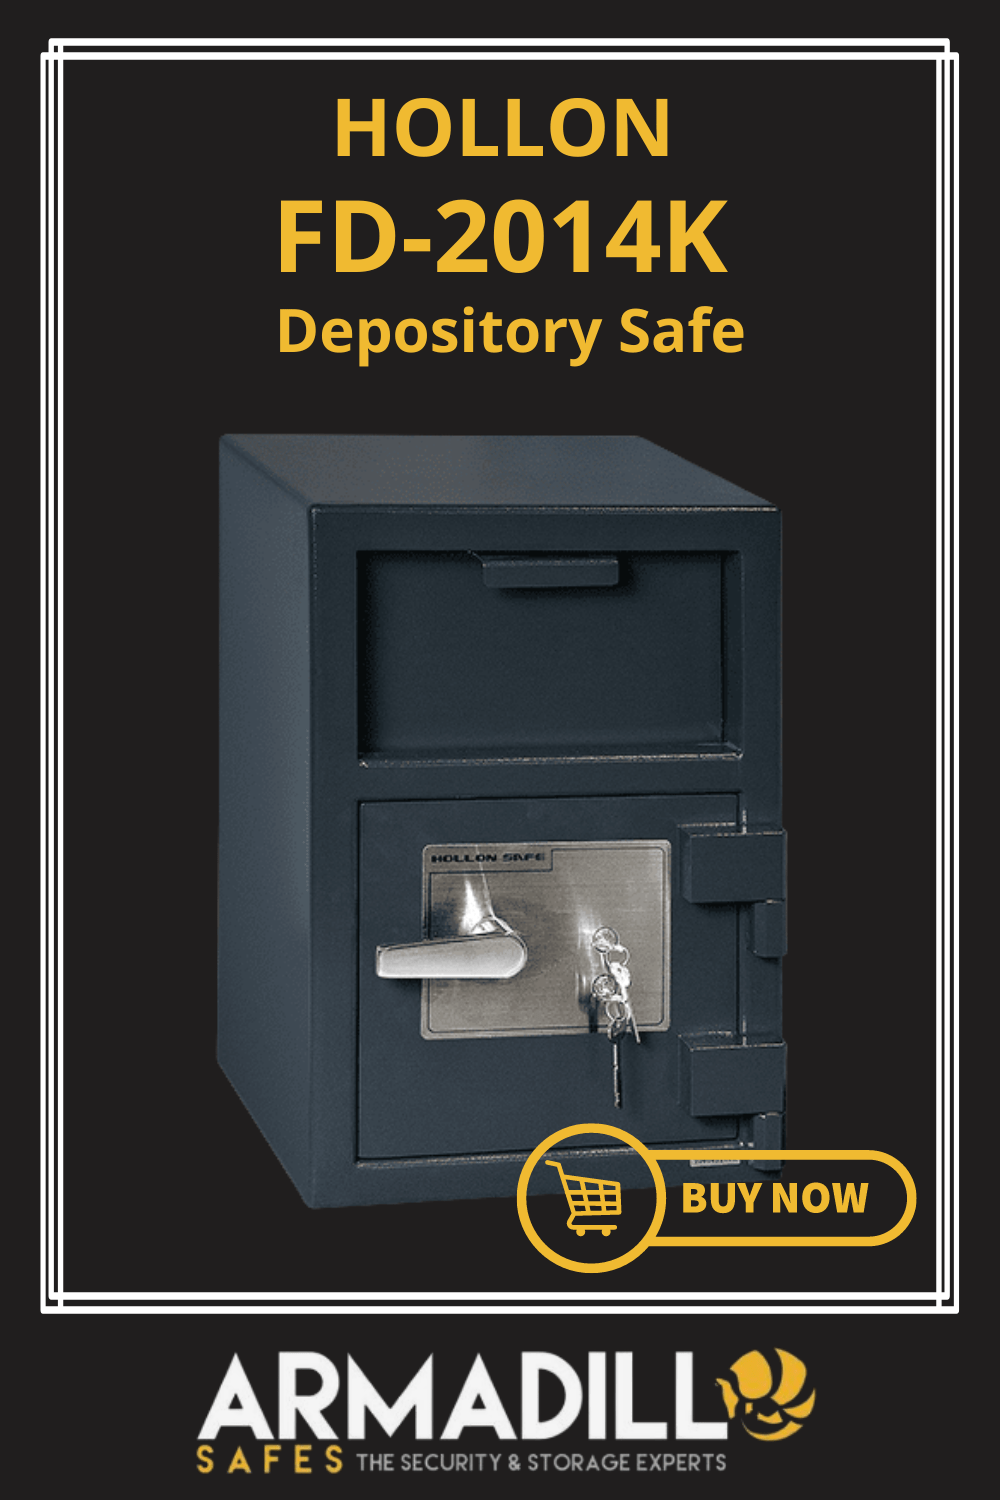 Hollon FD-2014K Depository Safe Armadillo Safe and Vault